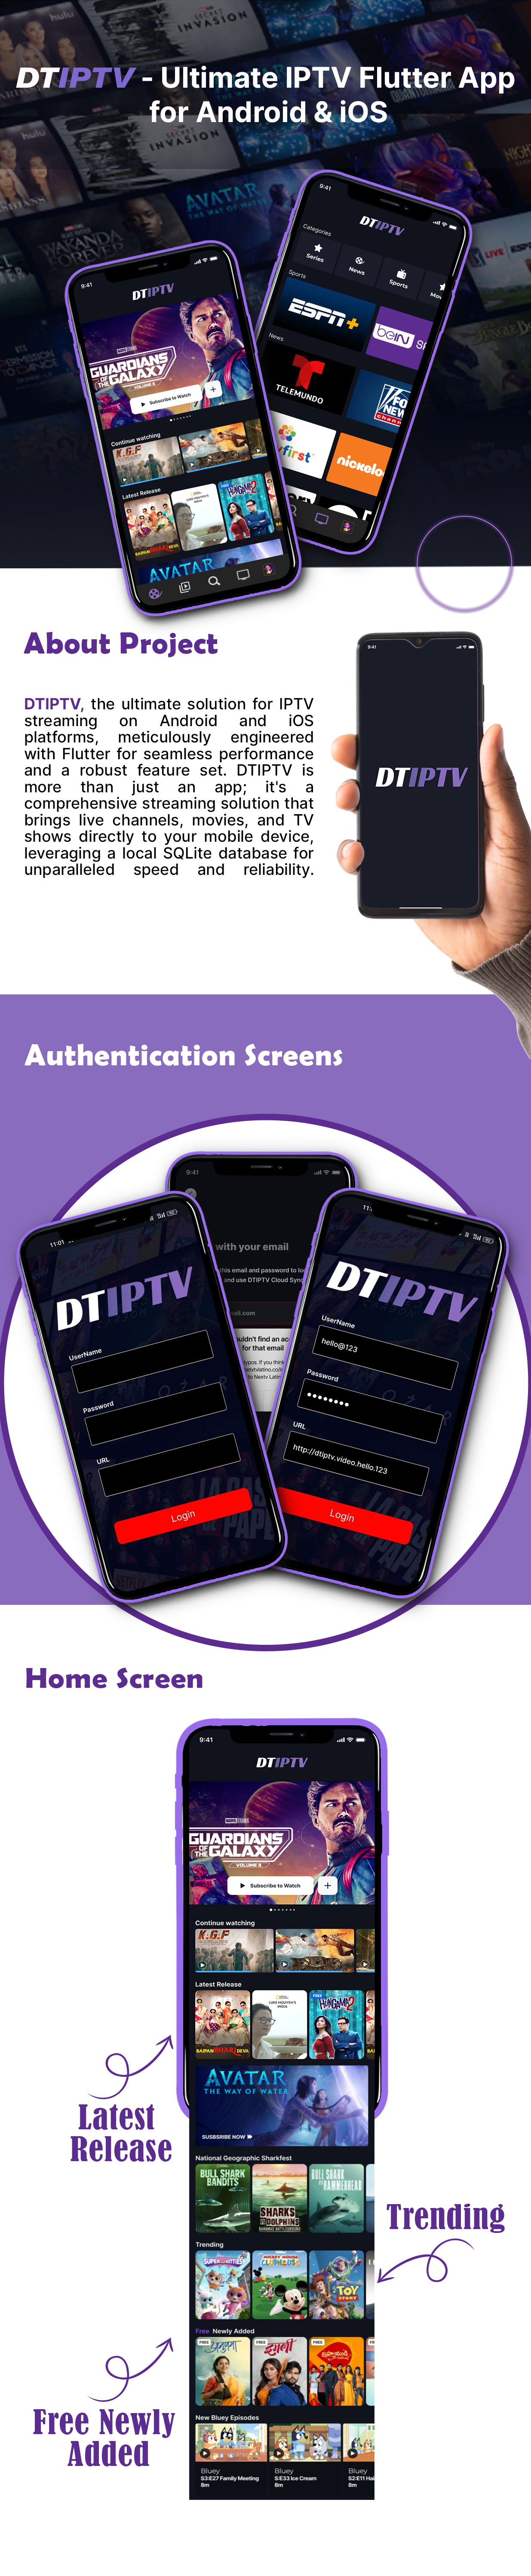 DTIPTV - Ultimate IPTV Flutter App for Android & iOS - 7